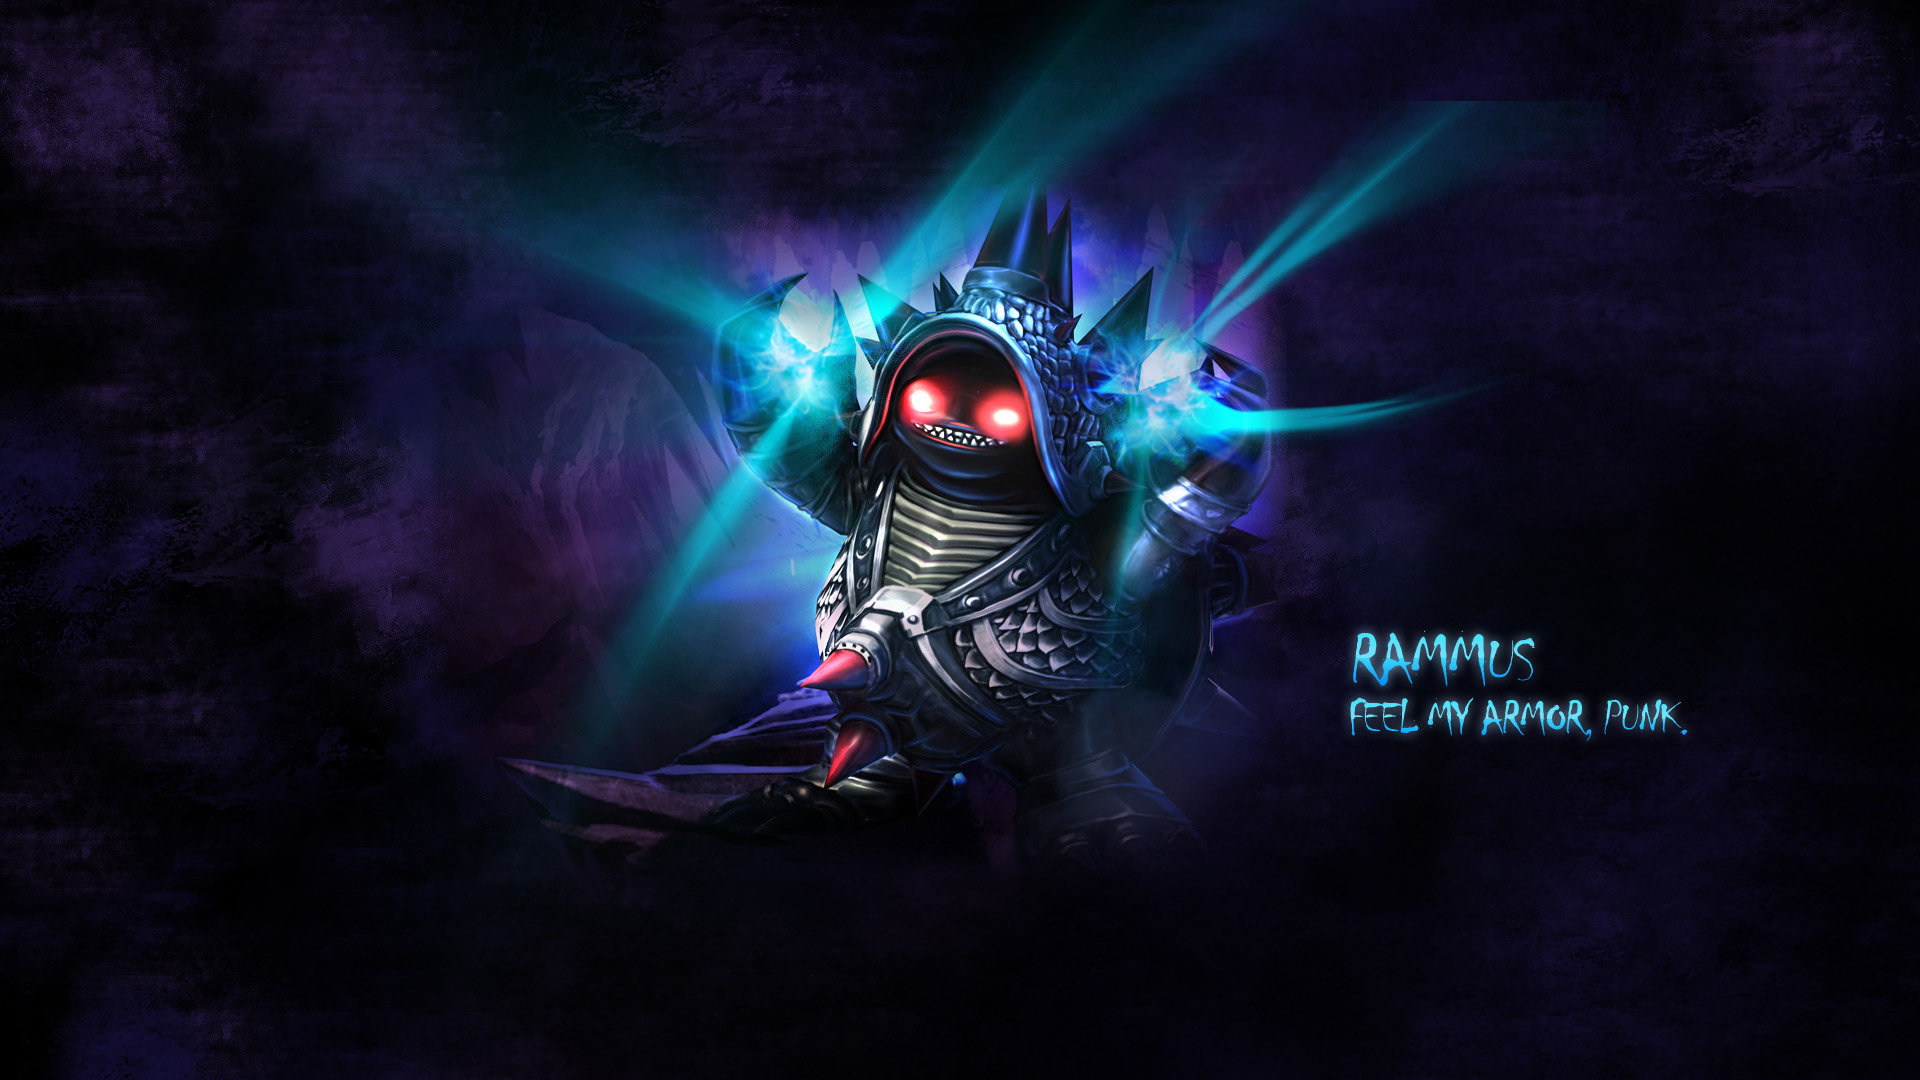 Best Rammus (League Of Legends) background ID:173417 for High Resolution hd 1920x1080 computer